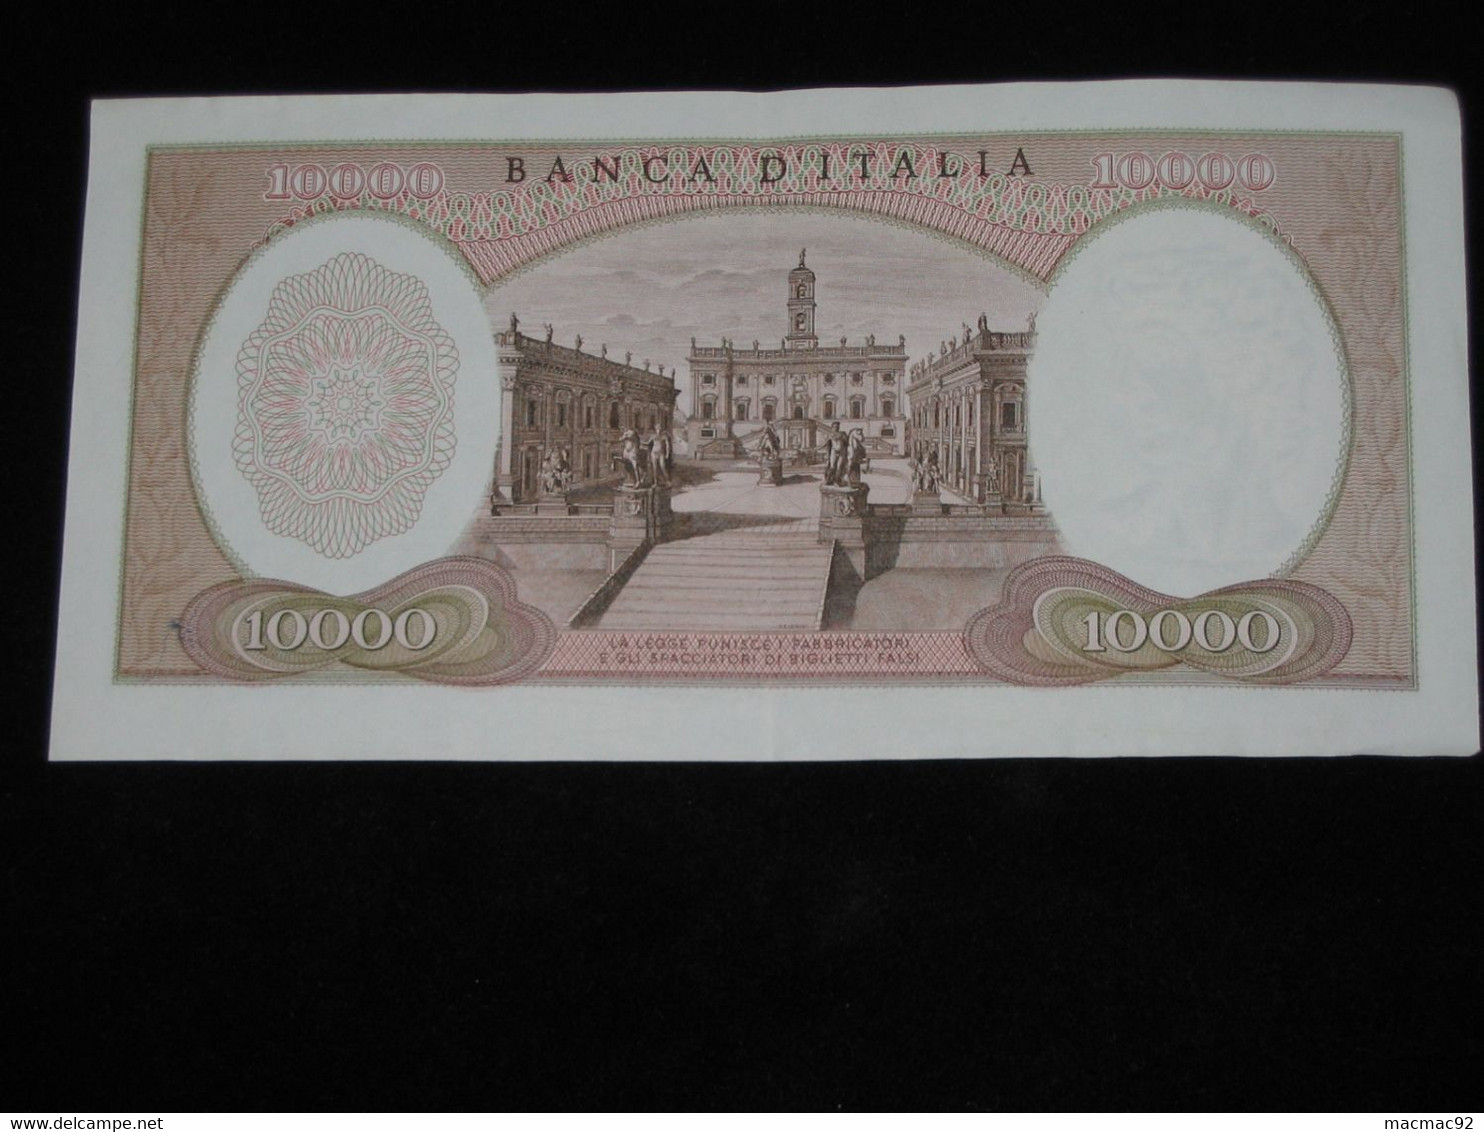 ITALIE - 10 000 Diecimila Lire  - Banca D'Italia 1973. **** EN ACHAT IMMEDIAT **** - 10000 Lire